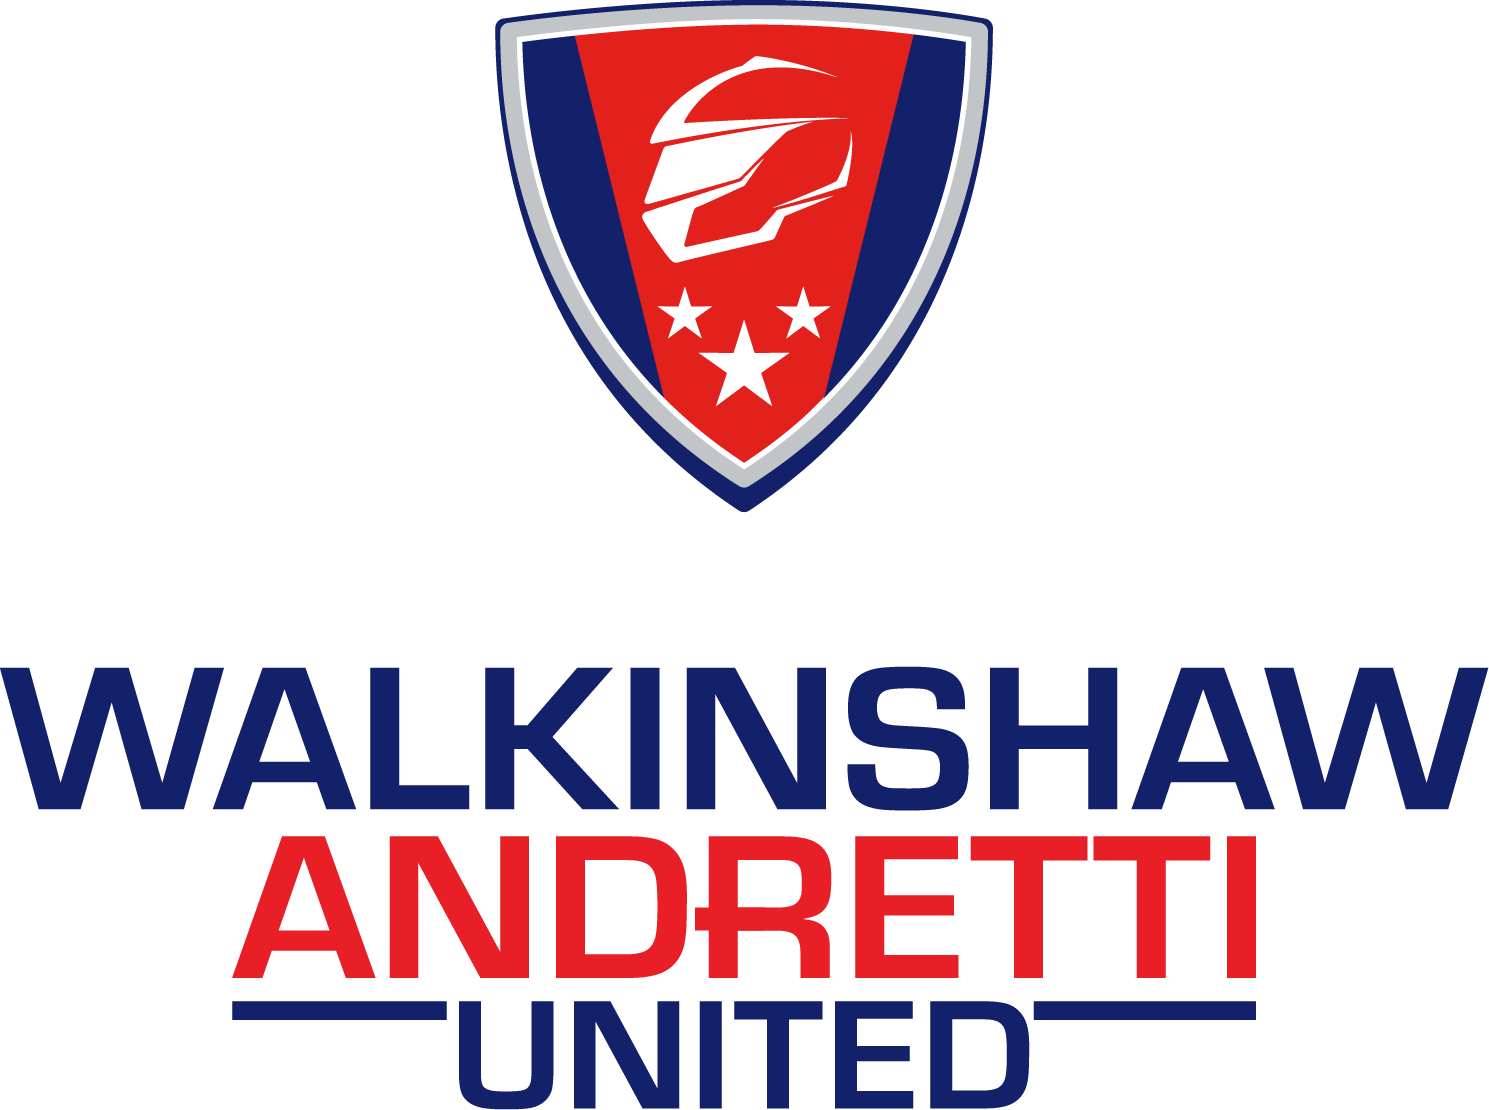 Walkinshaw Andretti United logo